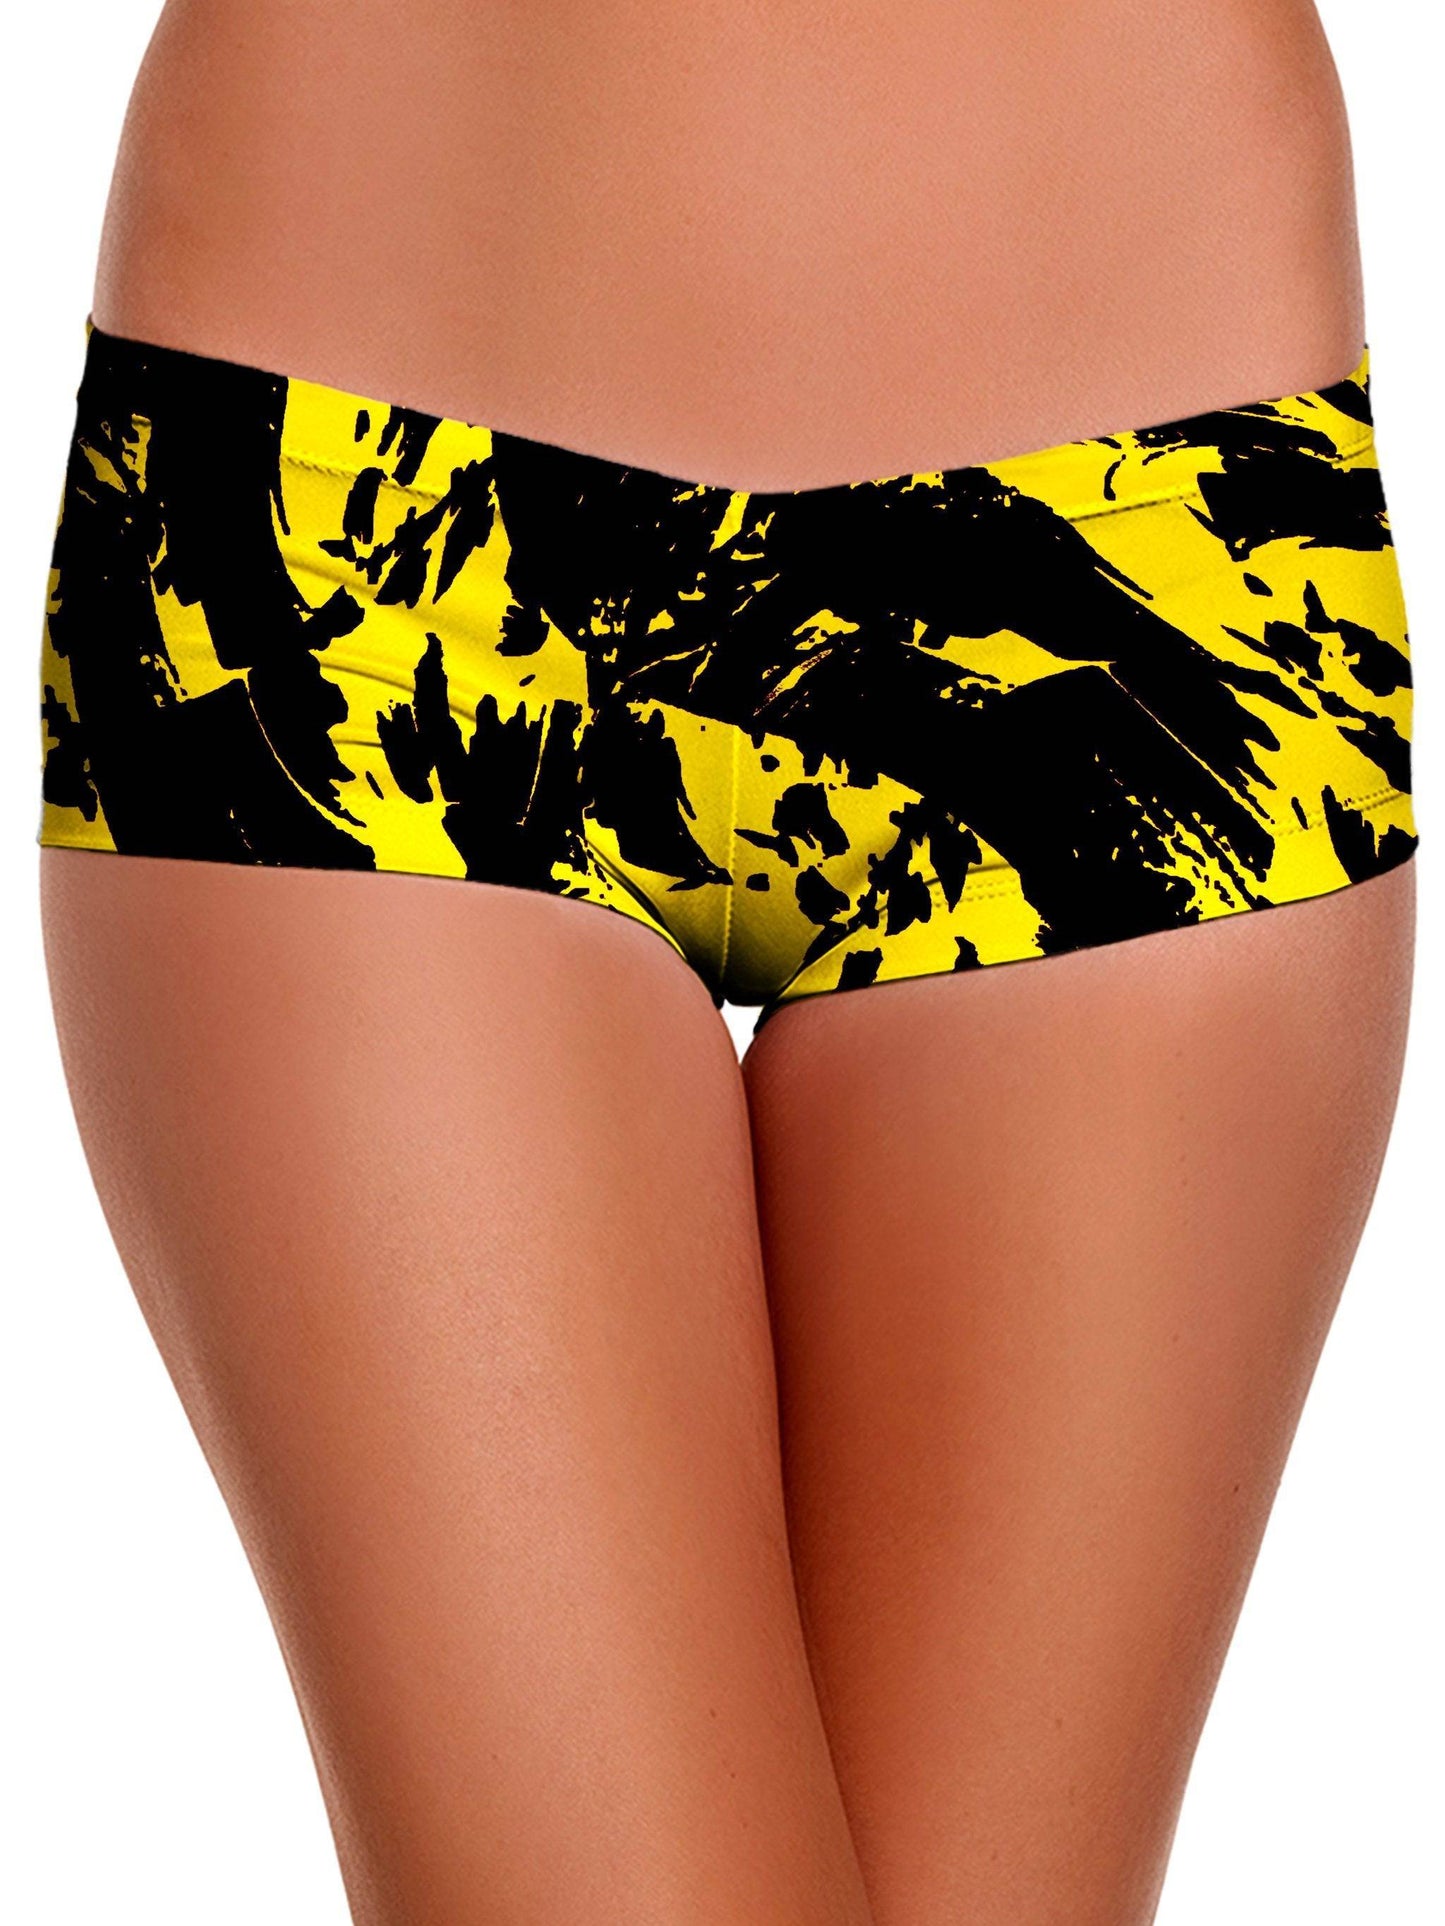 Black and Yellow Paint Splatter Booty Shorts, Big Tex Funkadelic, | iEDM